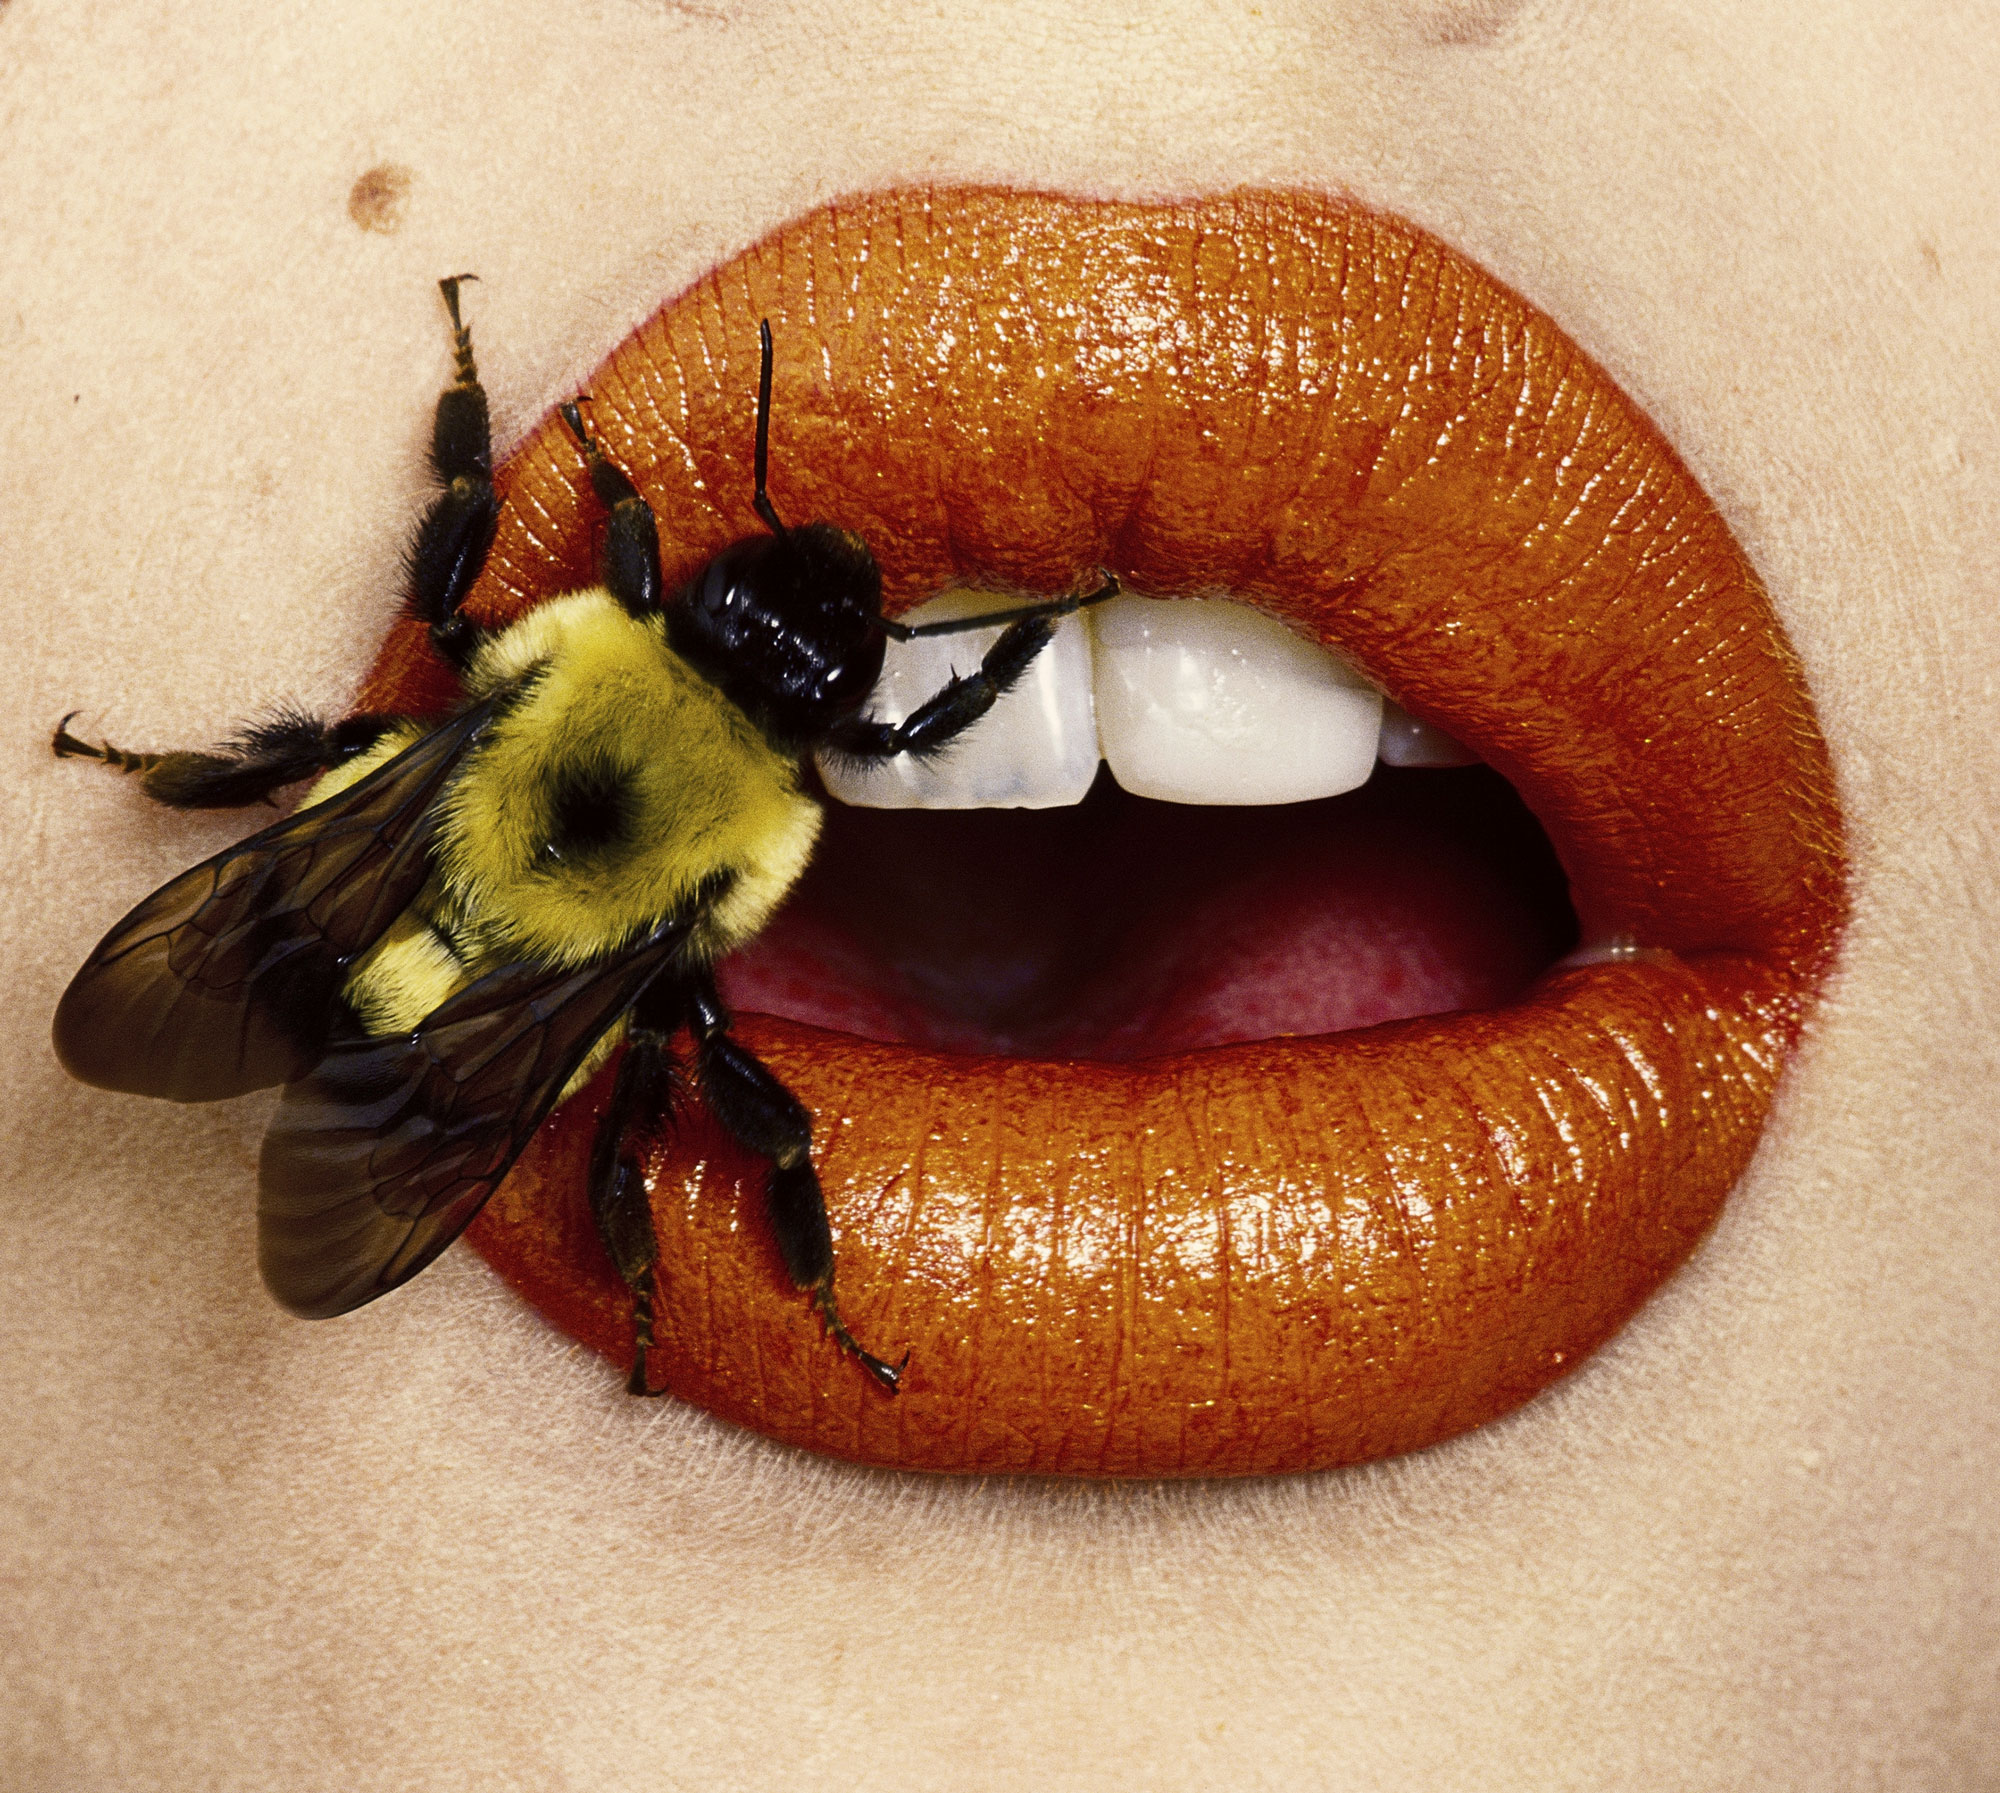 Irving Penn, Bee (A), New York, 1995 © The Irving Penn Foundation